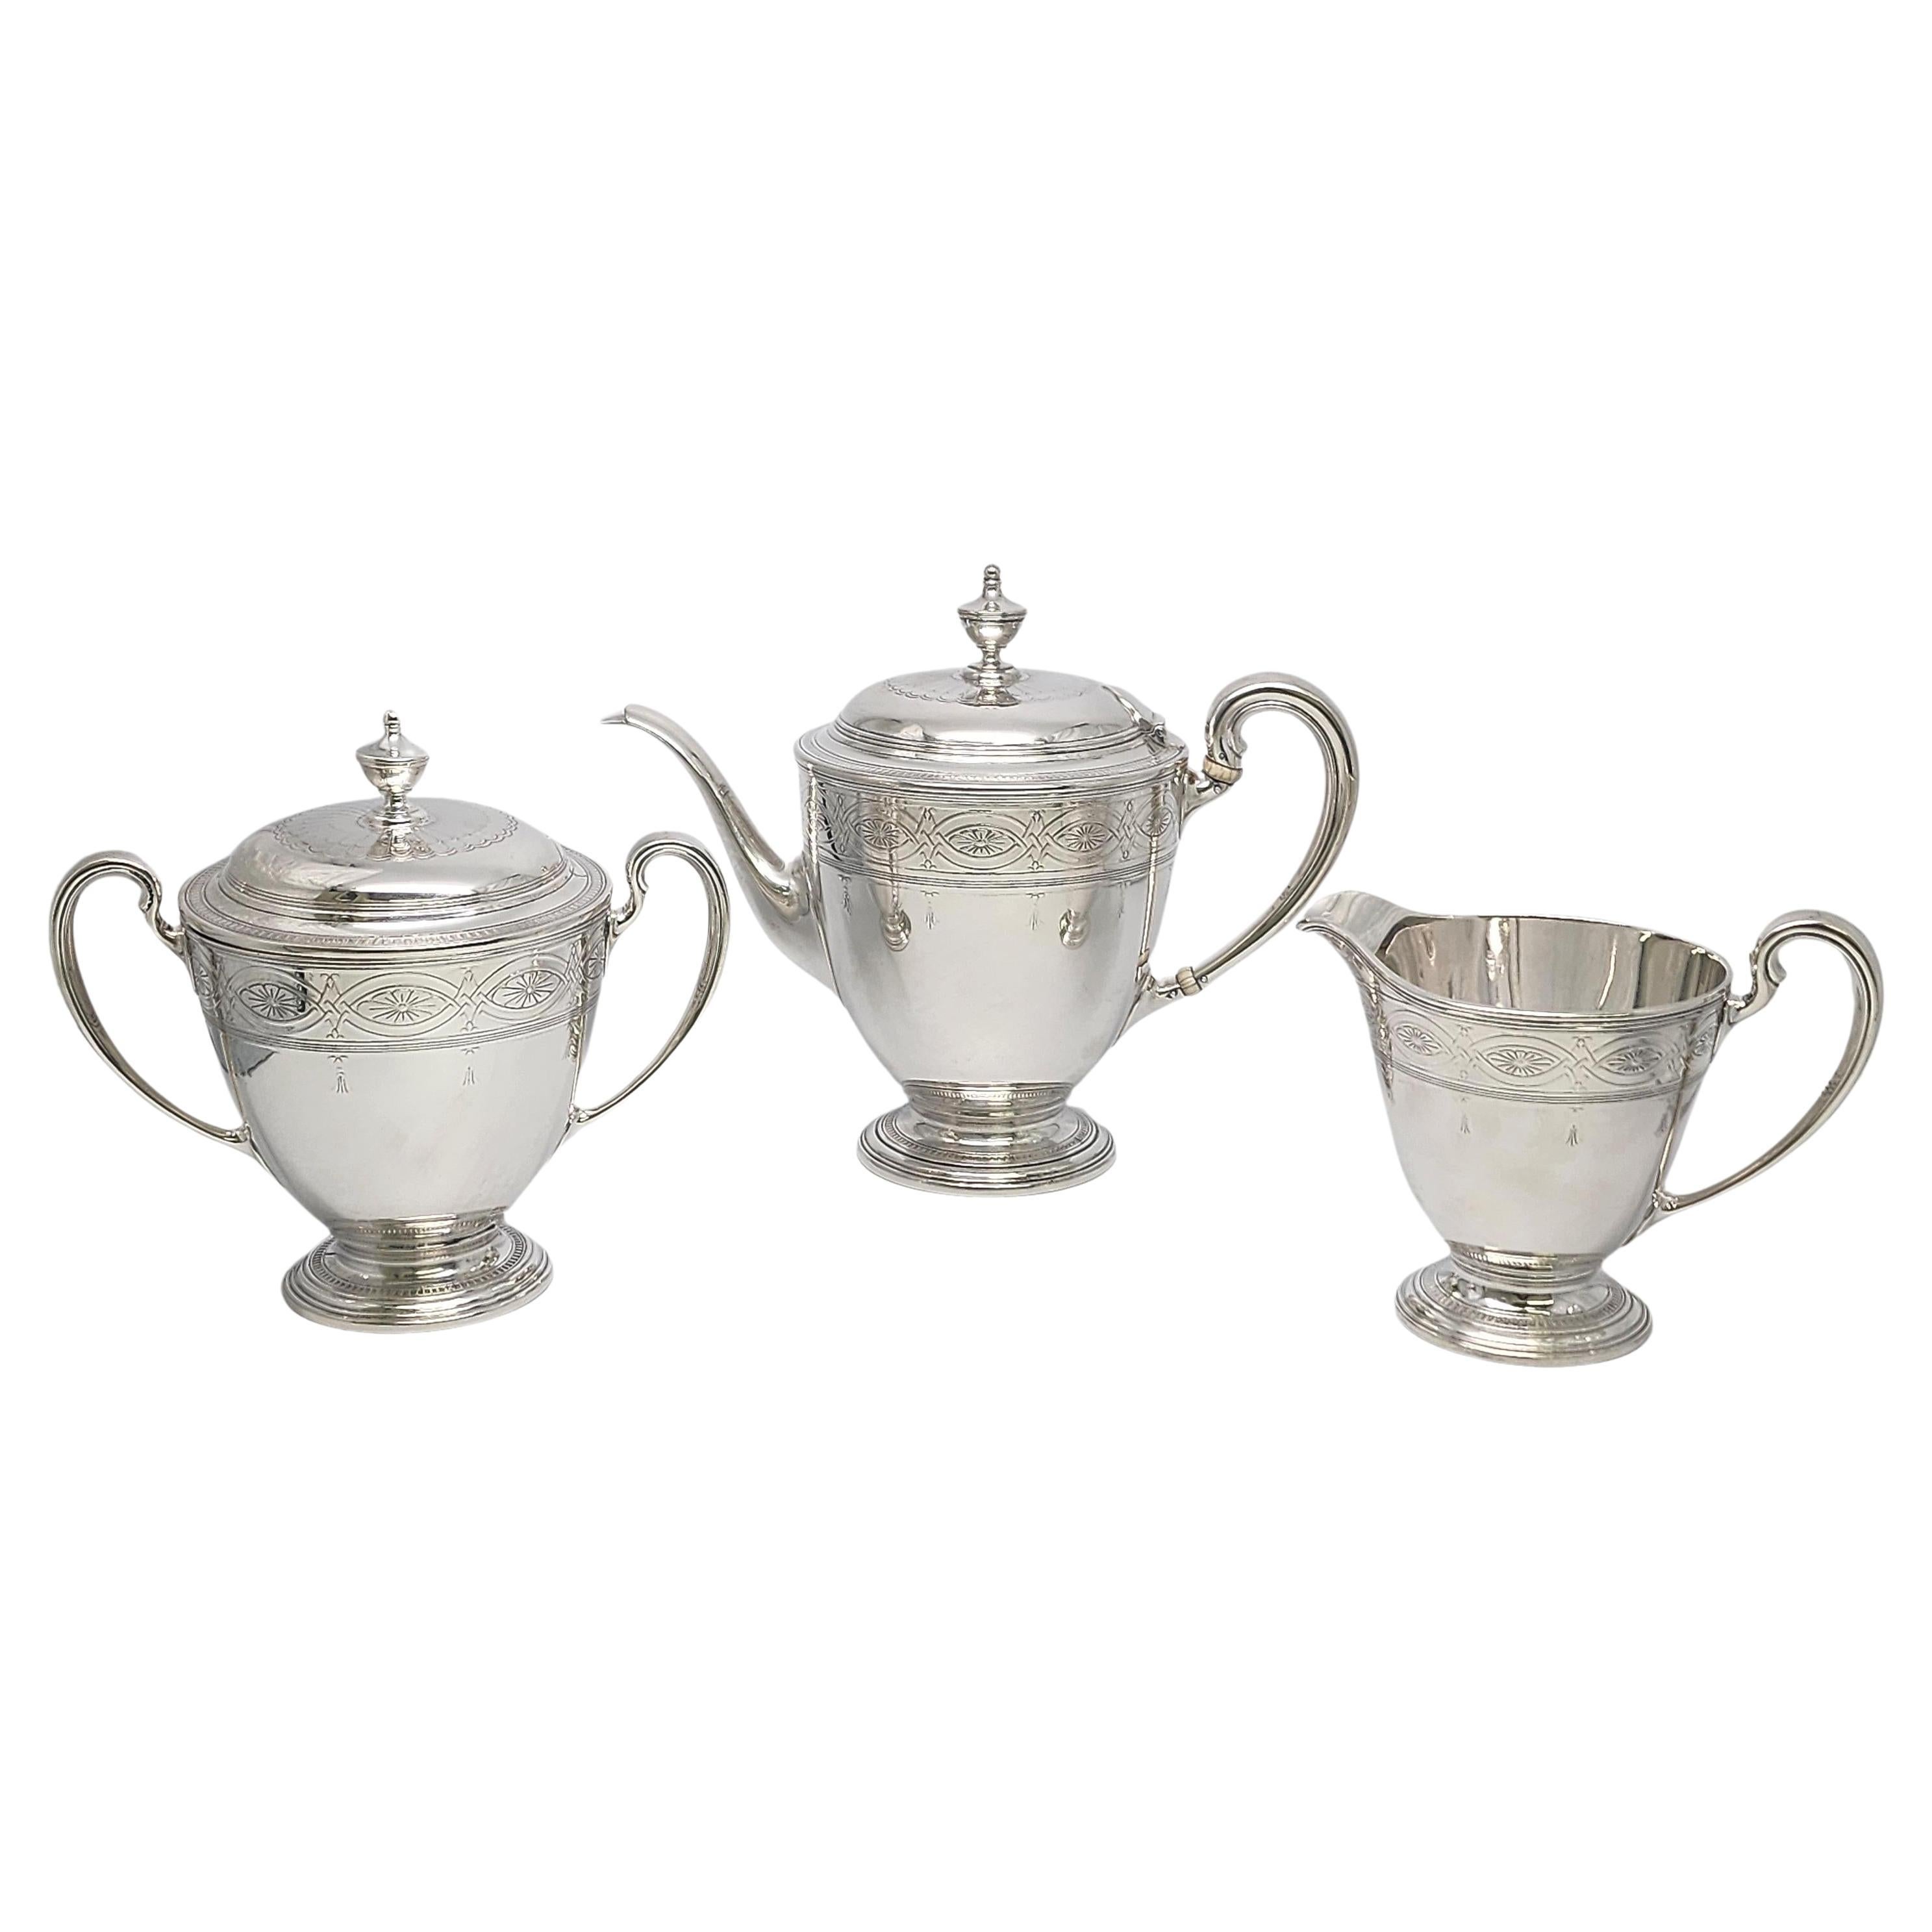 Tiffany & Co 3pc Sterling Silver Tea Set 20316 Teapot Creamer Sugar Bowl #17734